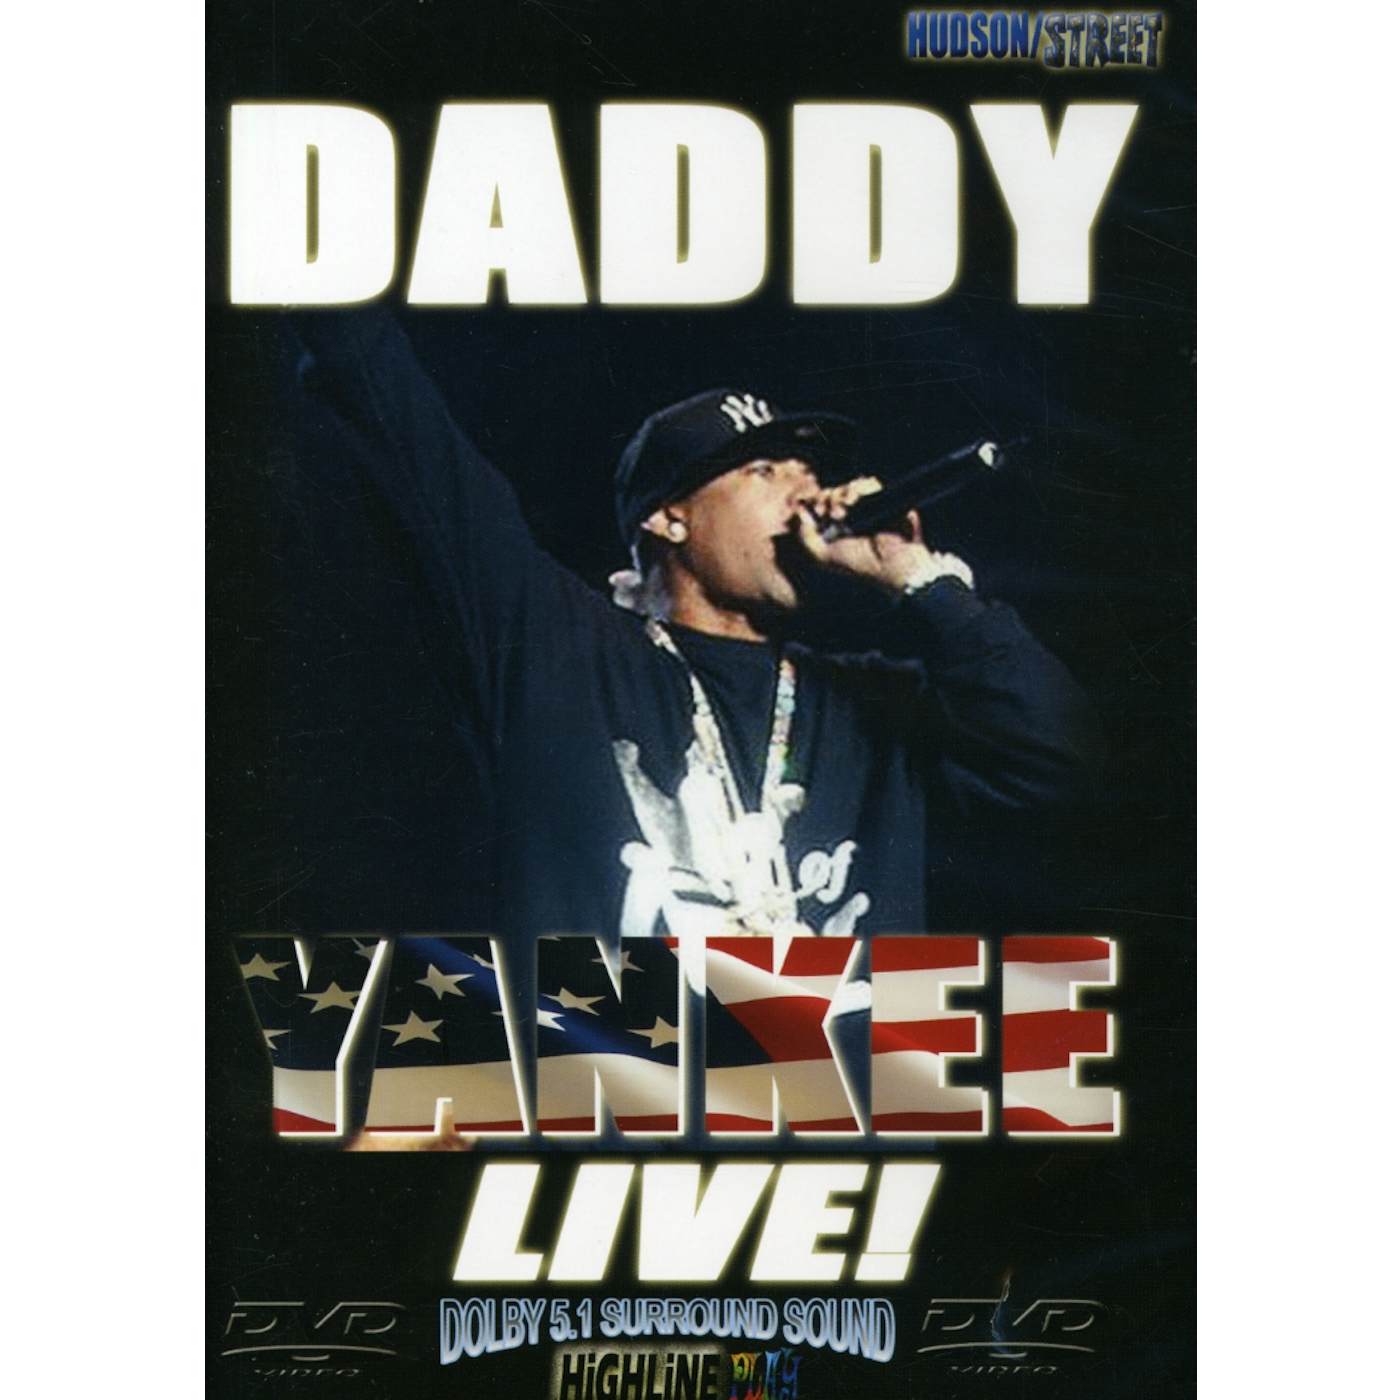 DADDY YANKEE LIVE DVD